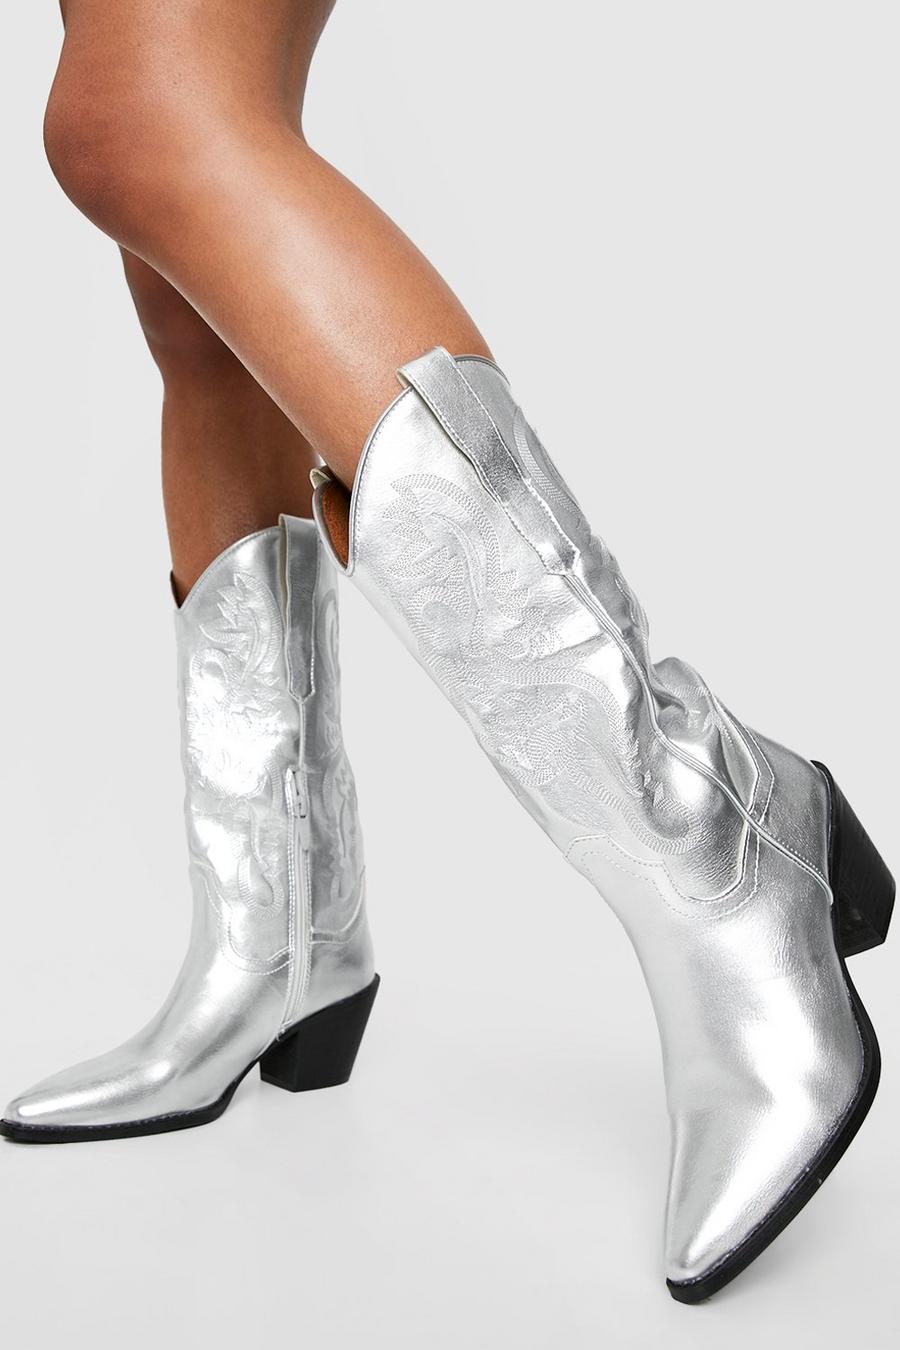 Silver Metallic Knee High Cowboy Western Boots 